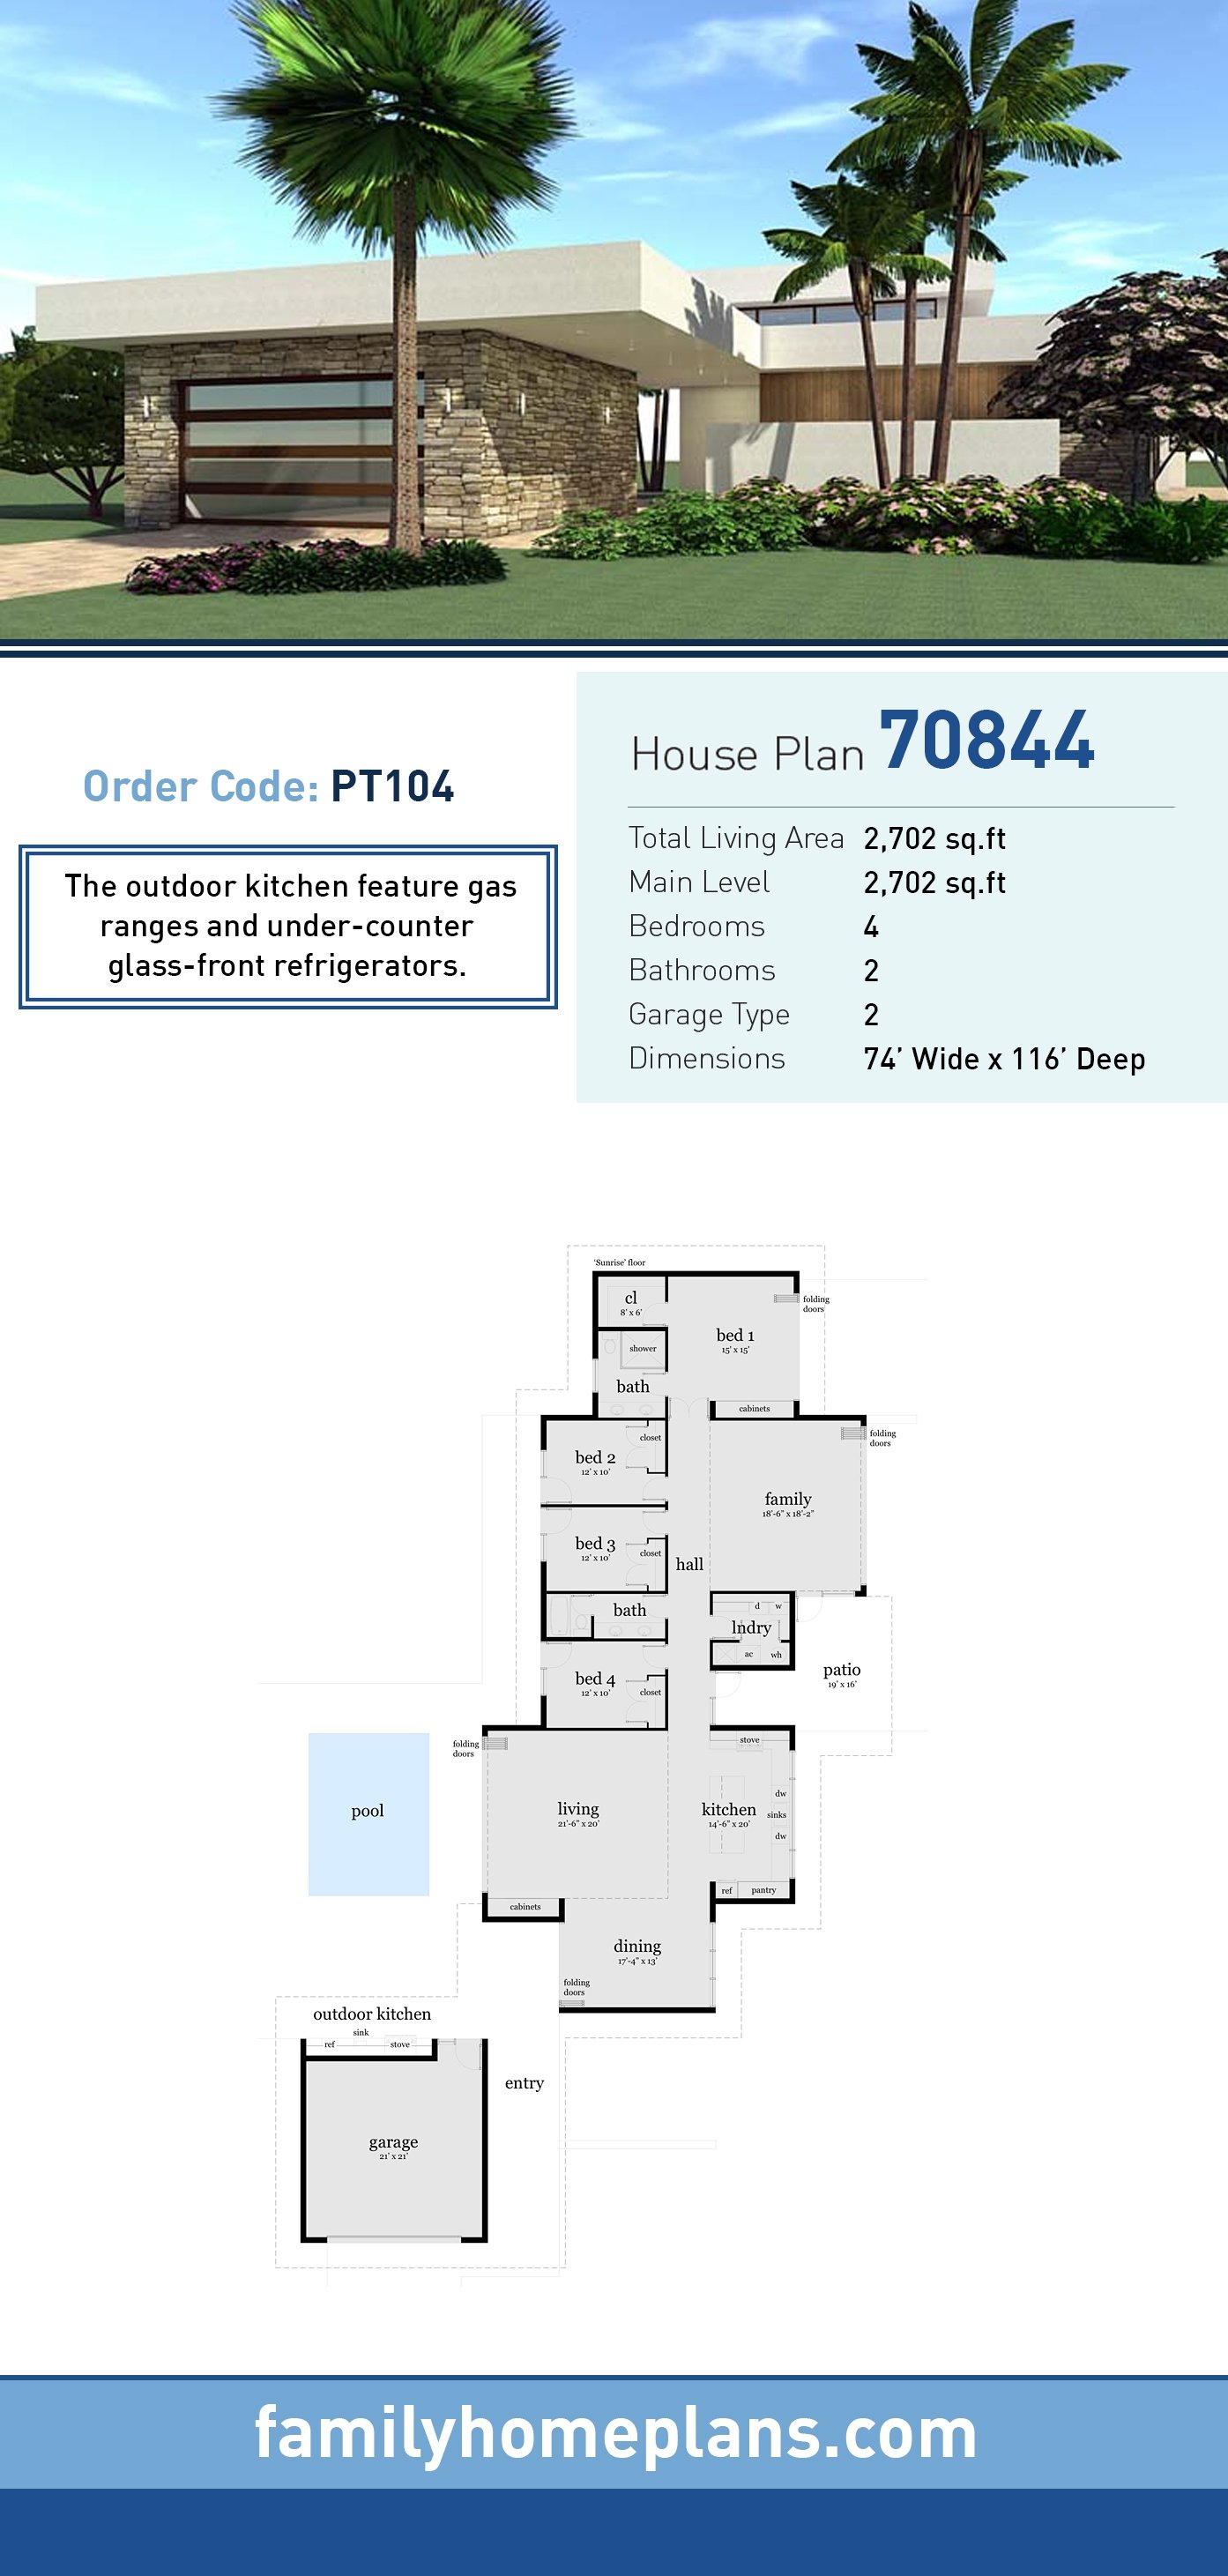 House Plan 70844